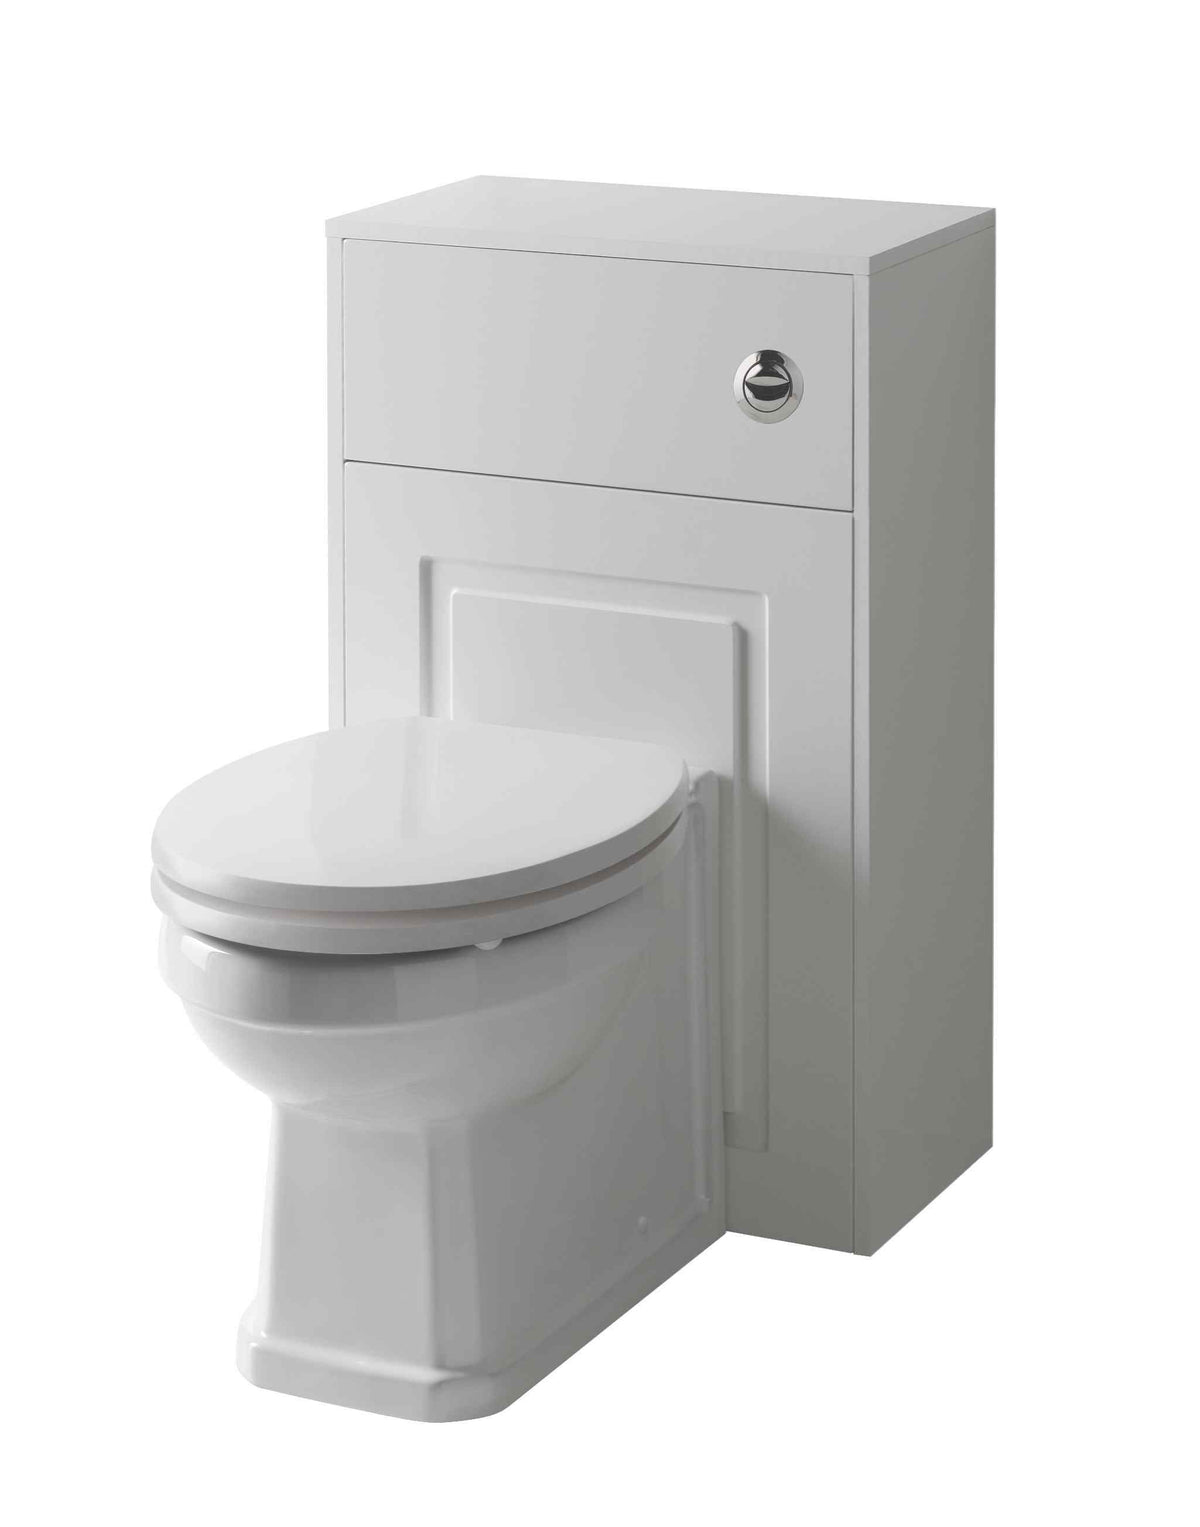 Astley 1400mm Matt White WC Unit: Toilet and Basin Combo